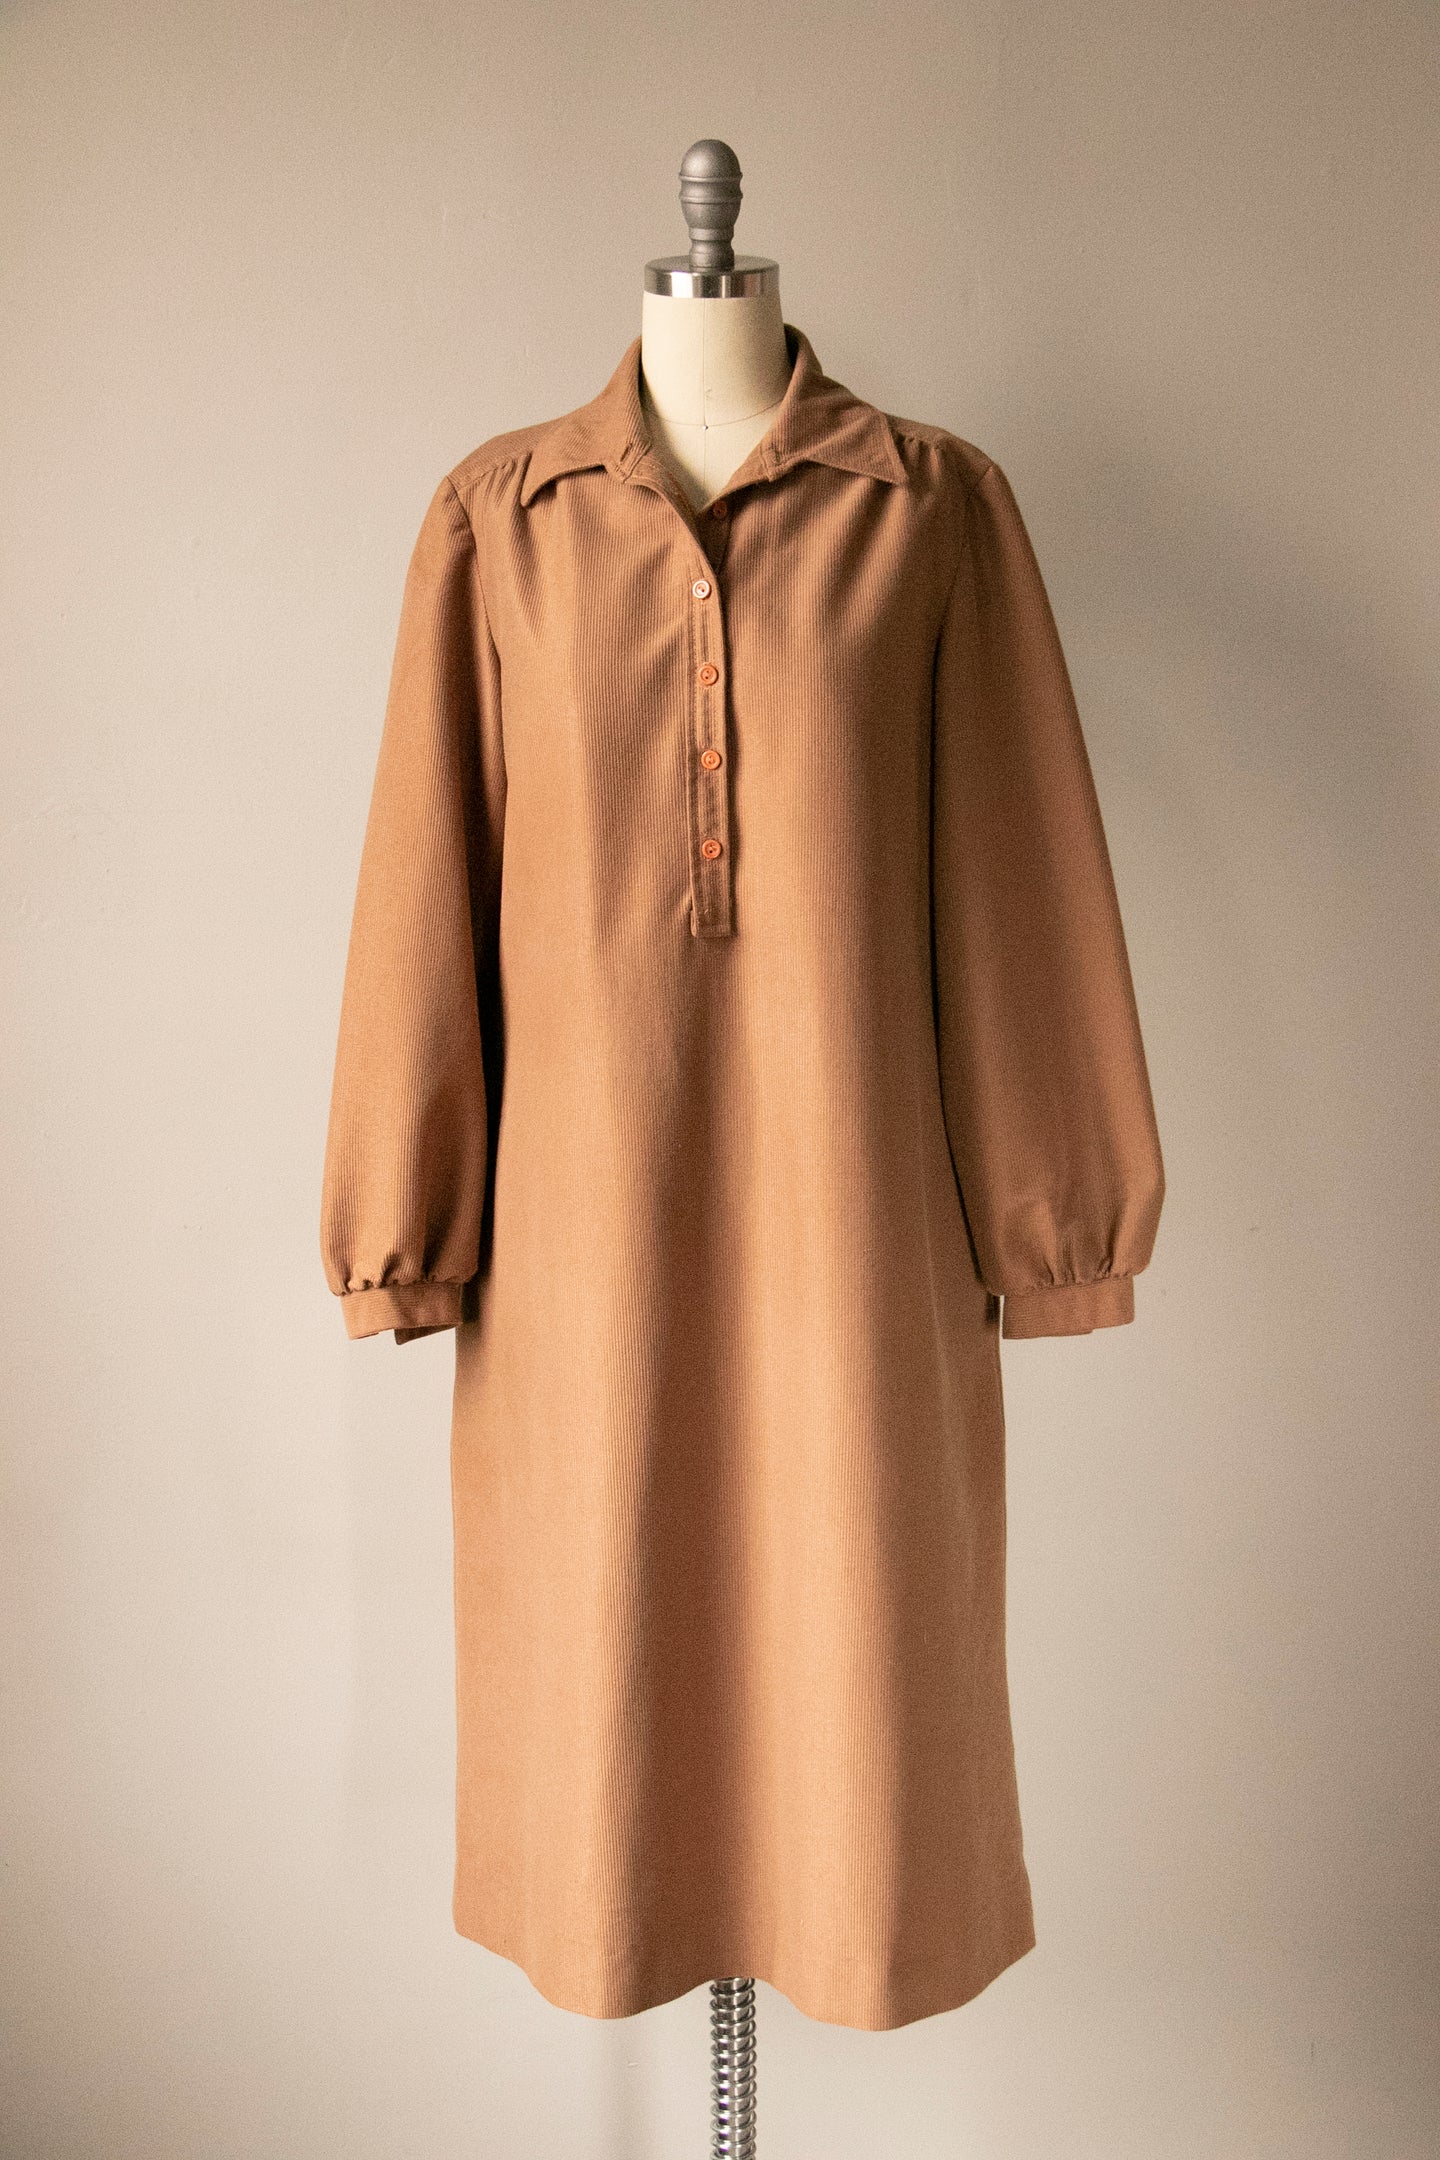 1970s Dress Brown Corduroy Shirtfront M